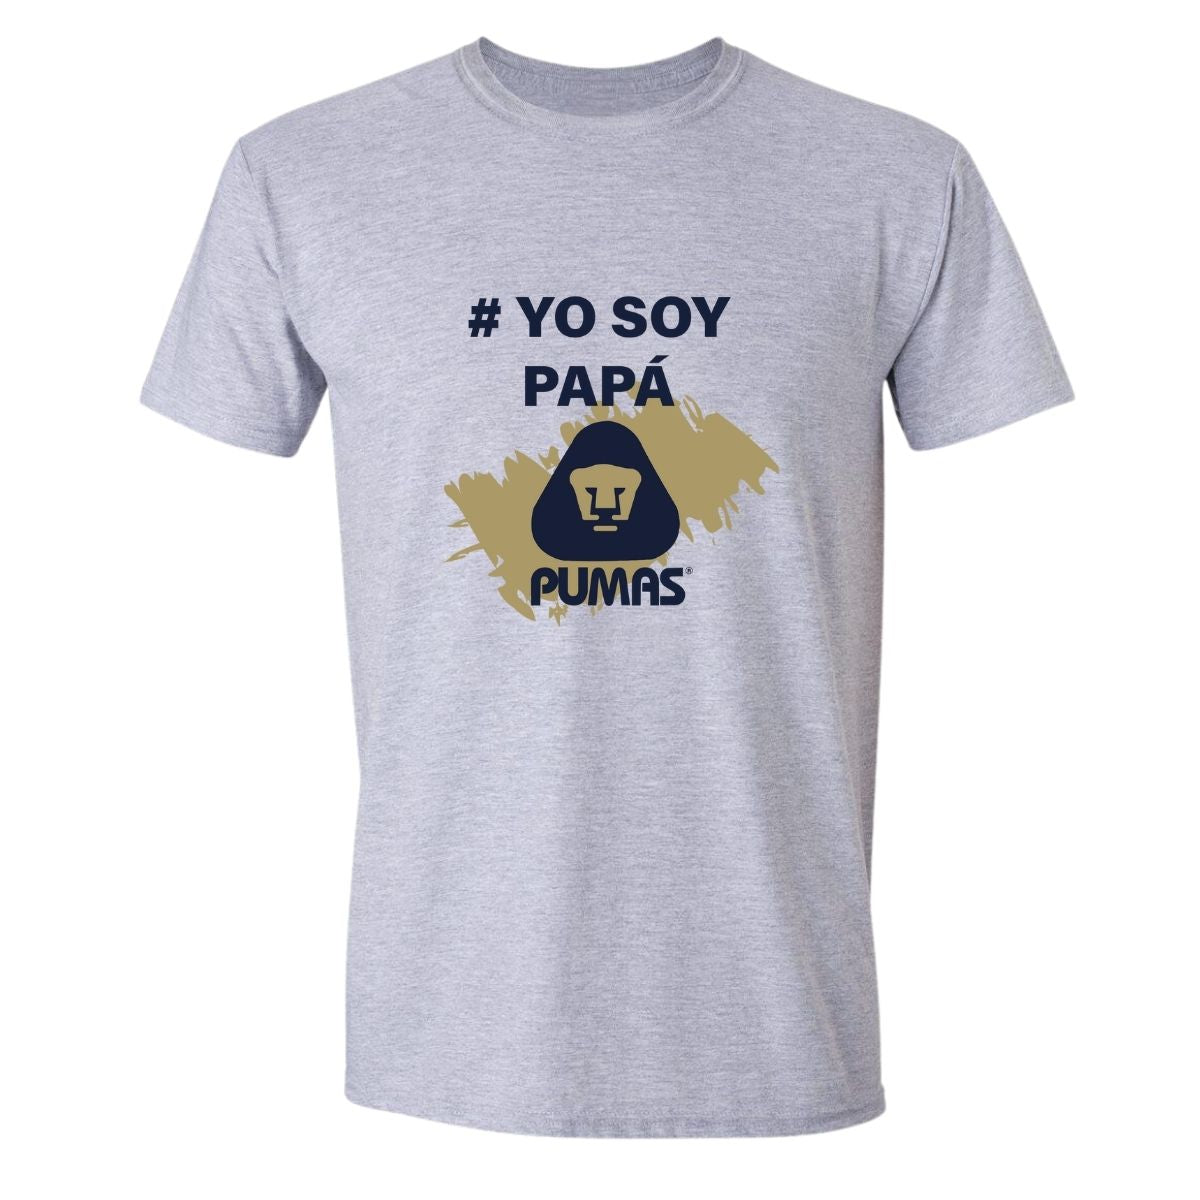 Playera Hombre Pumas UNAM Yo soy papá Pumas